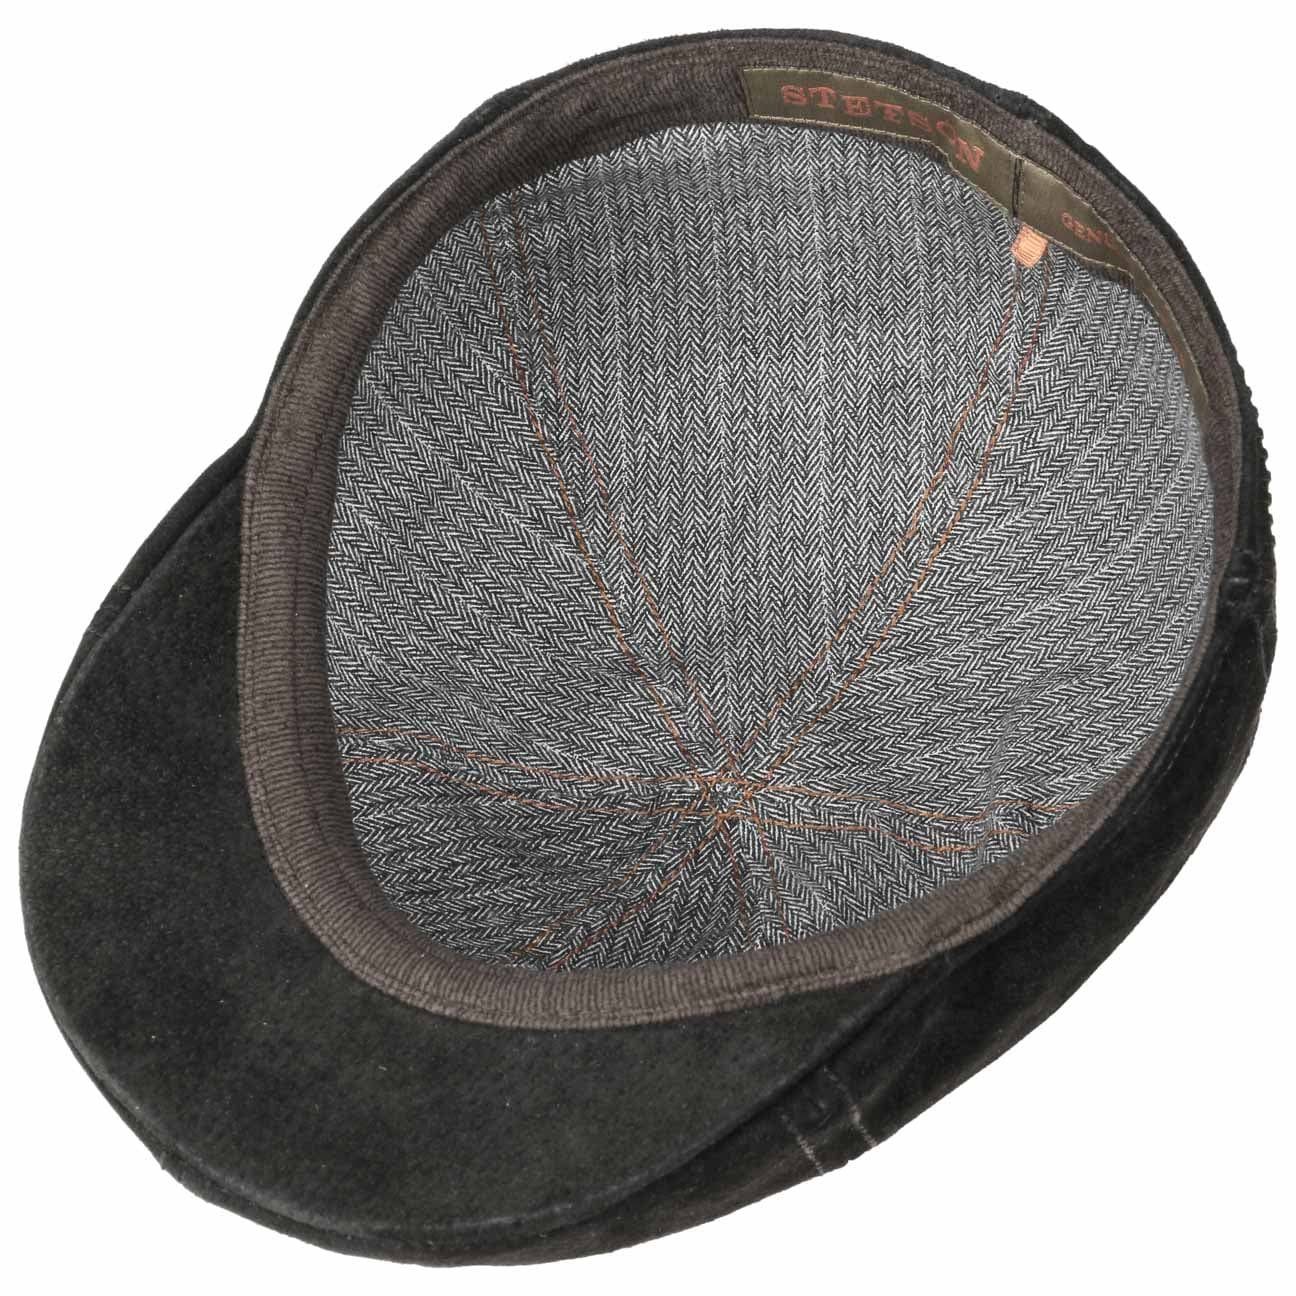 (1-St) Schirm Stetson Ledercap mit Cap Flat schwarz